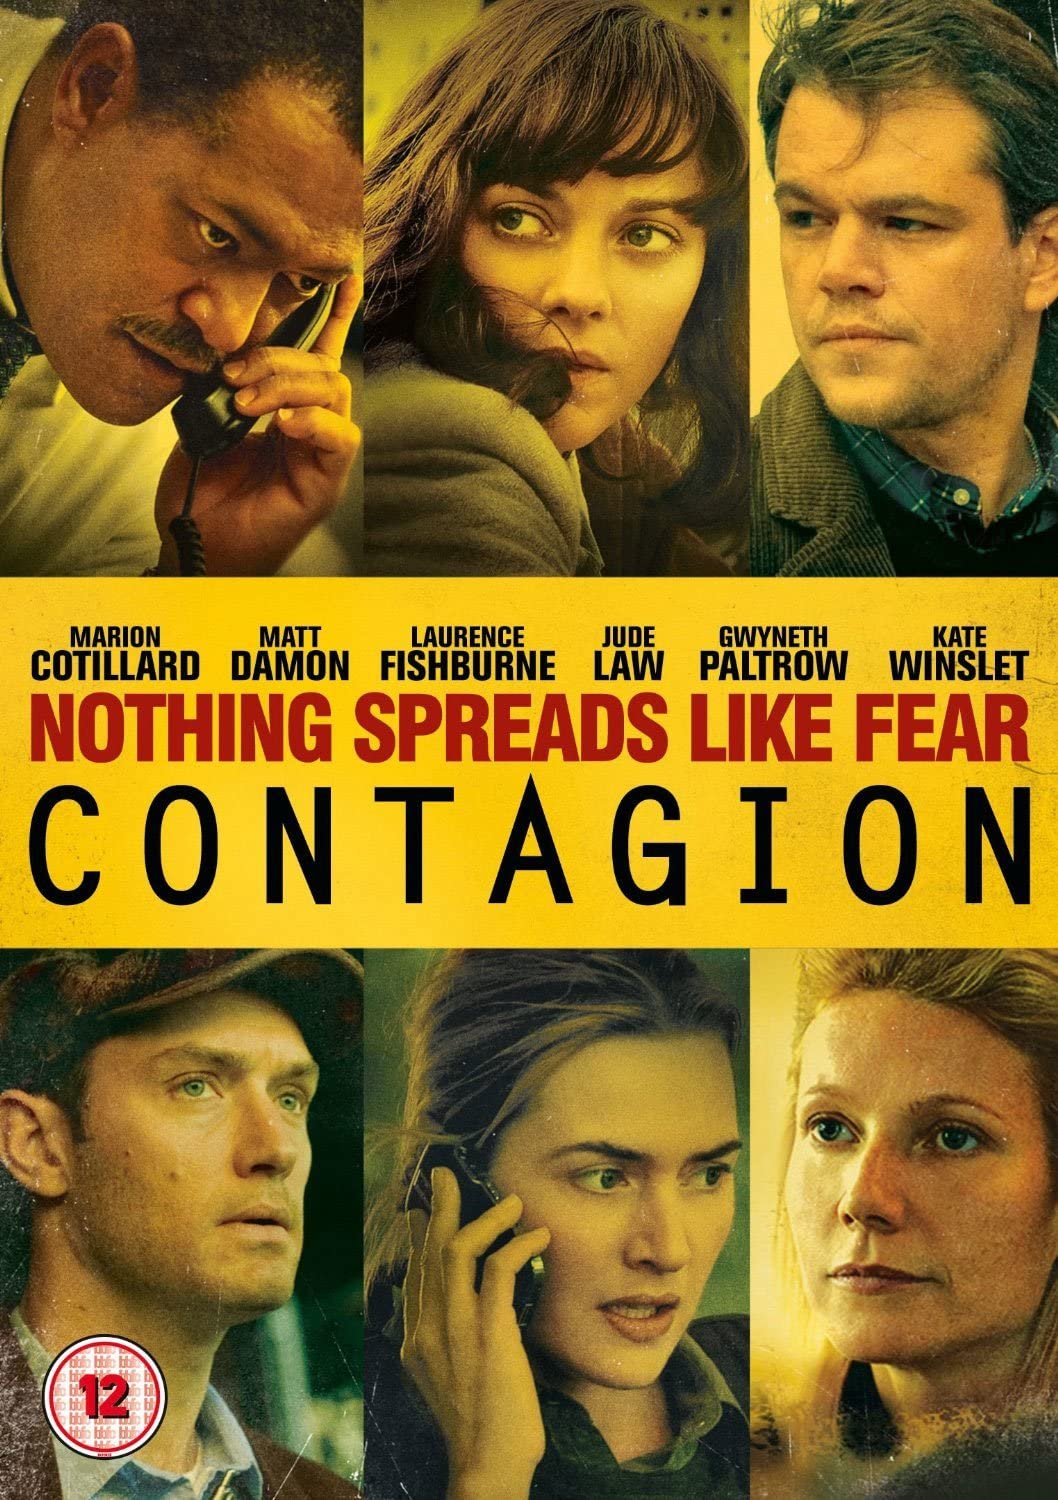 Contagion [2012] - Thriller/Drama [DVD]